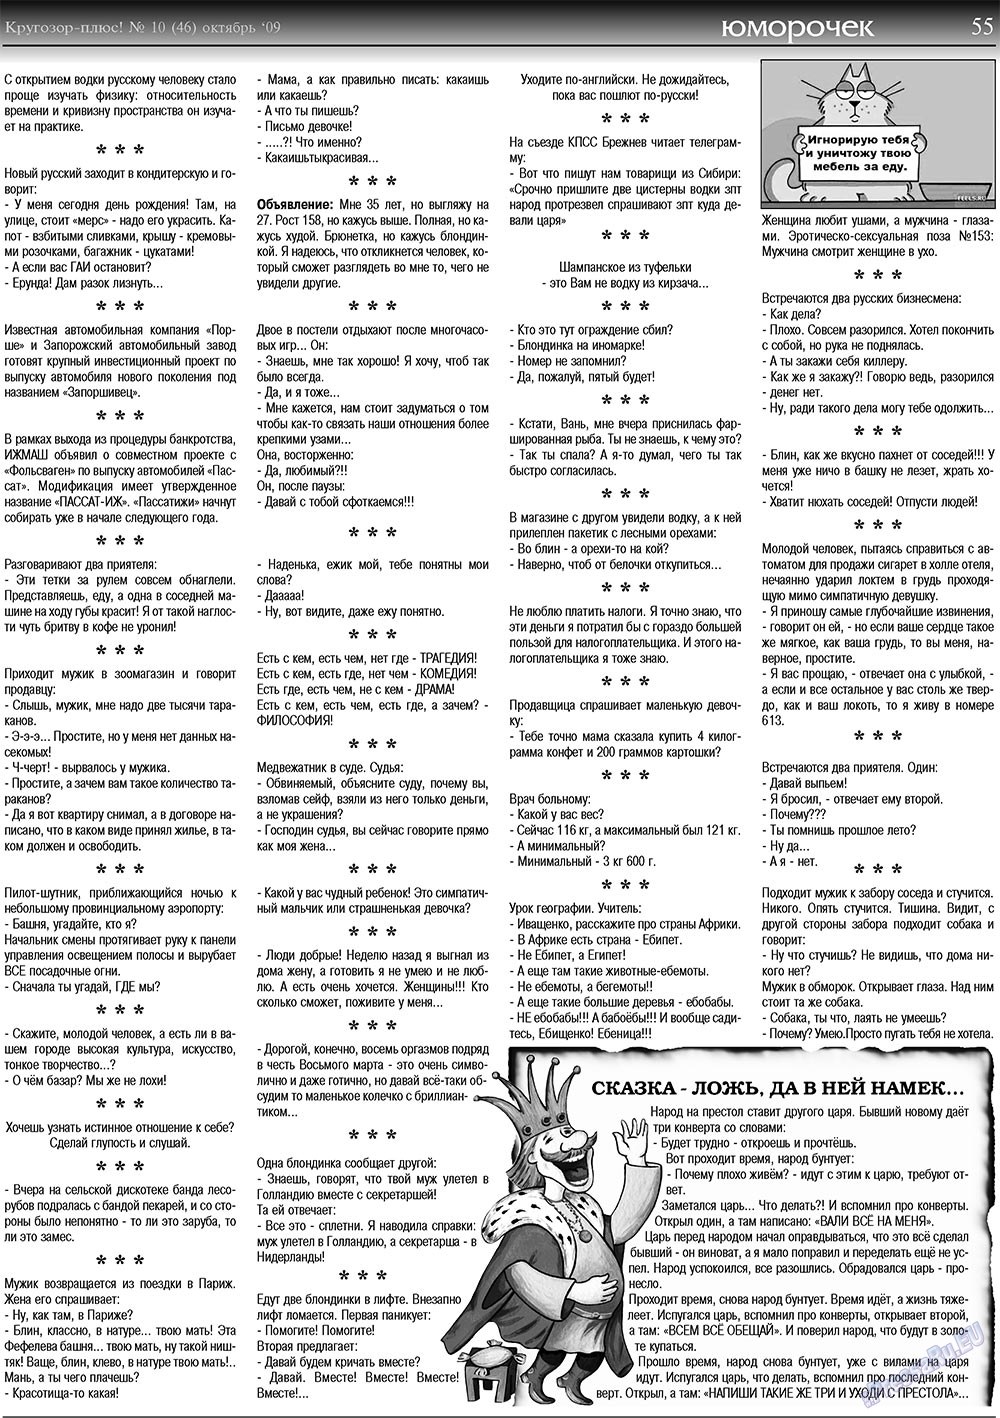 Кругозор плюс! (газета). 2009 год, номер 10, стр. 55